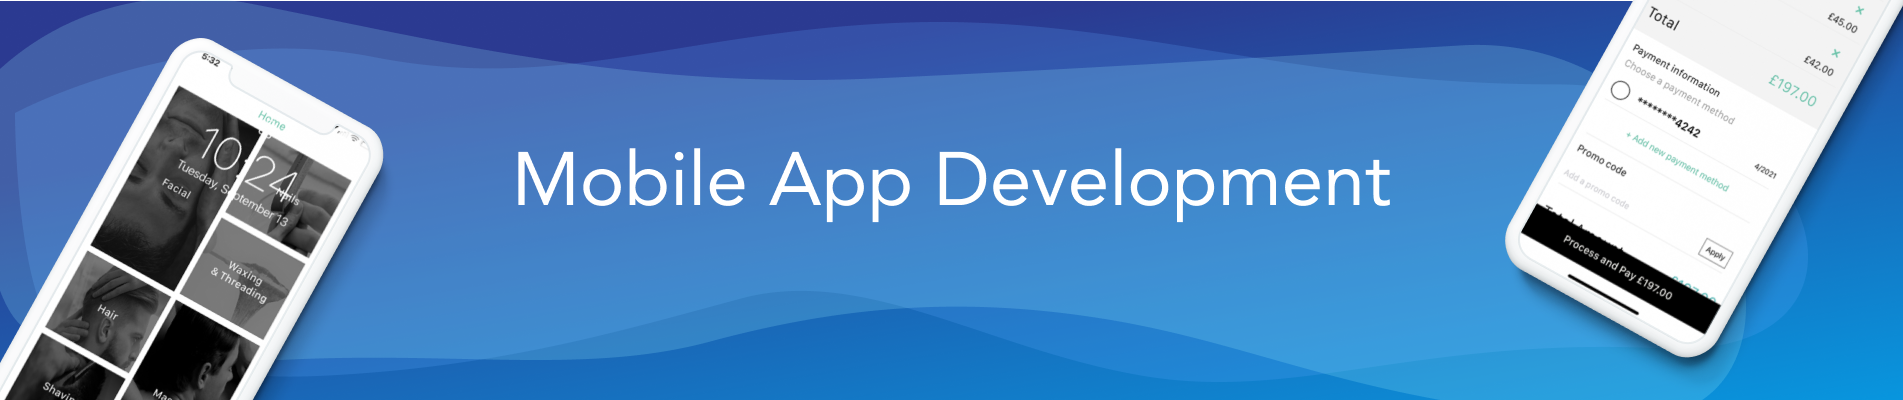 Mobile App Development Company London | App Development Company